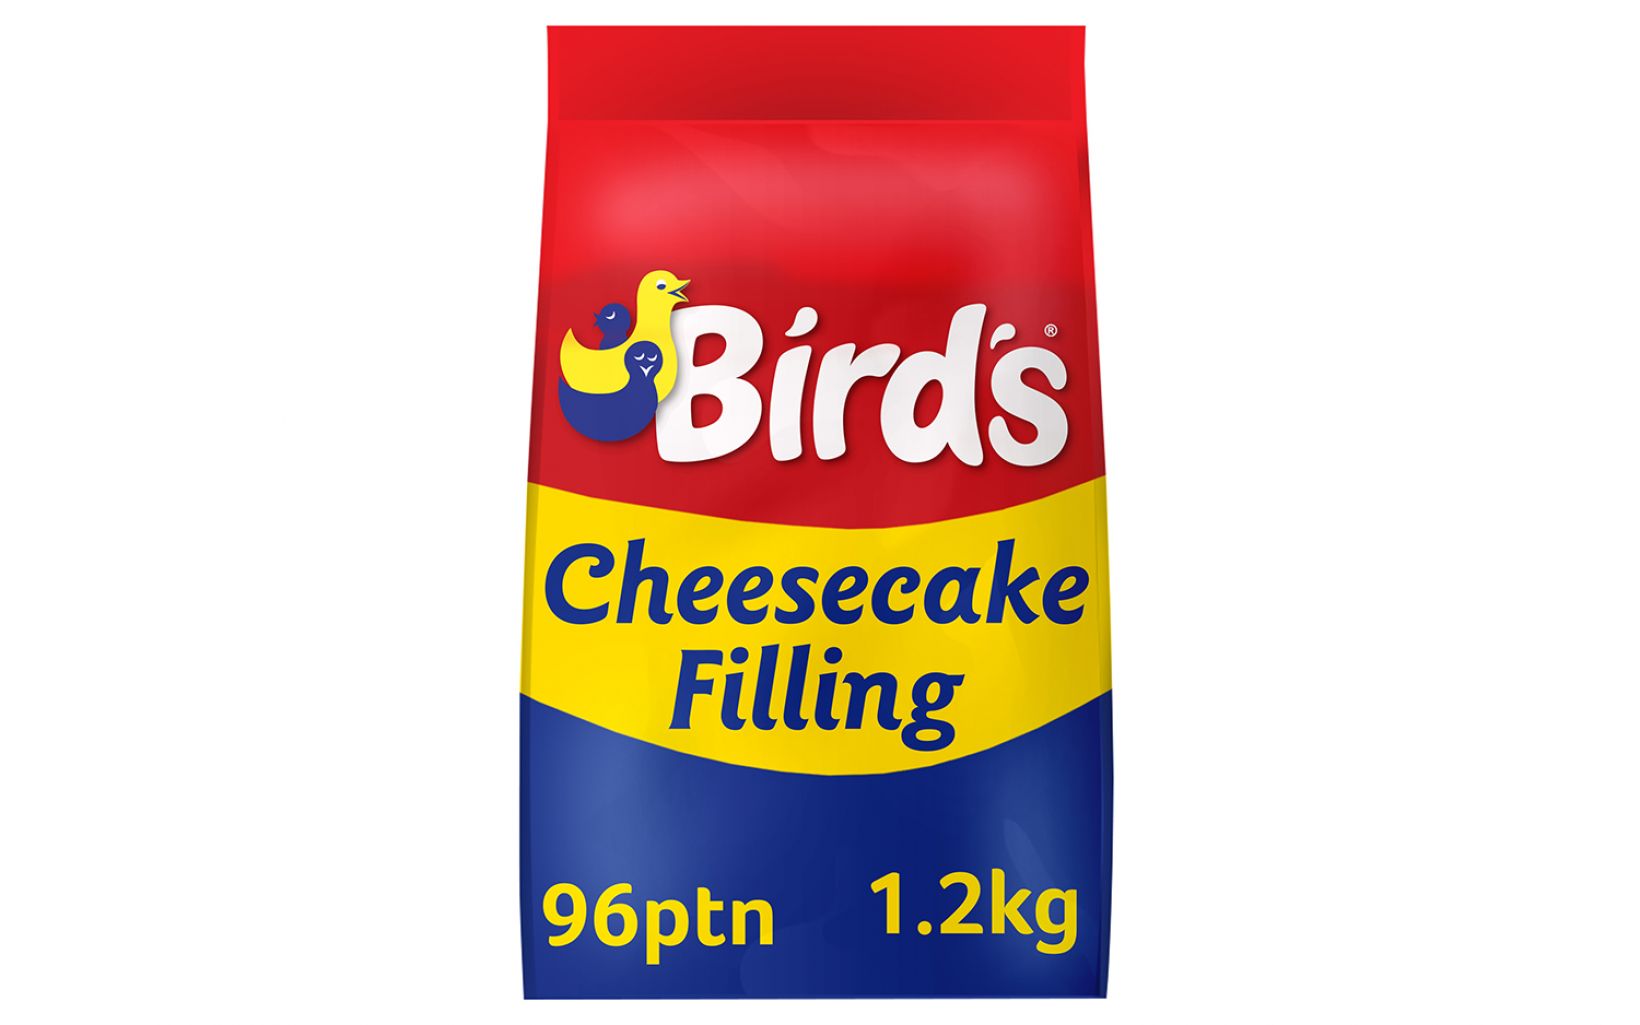 9139 Birds Cheesecake Filling Mix Bag 96ptn Edit